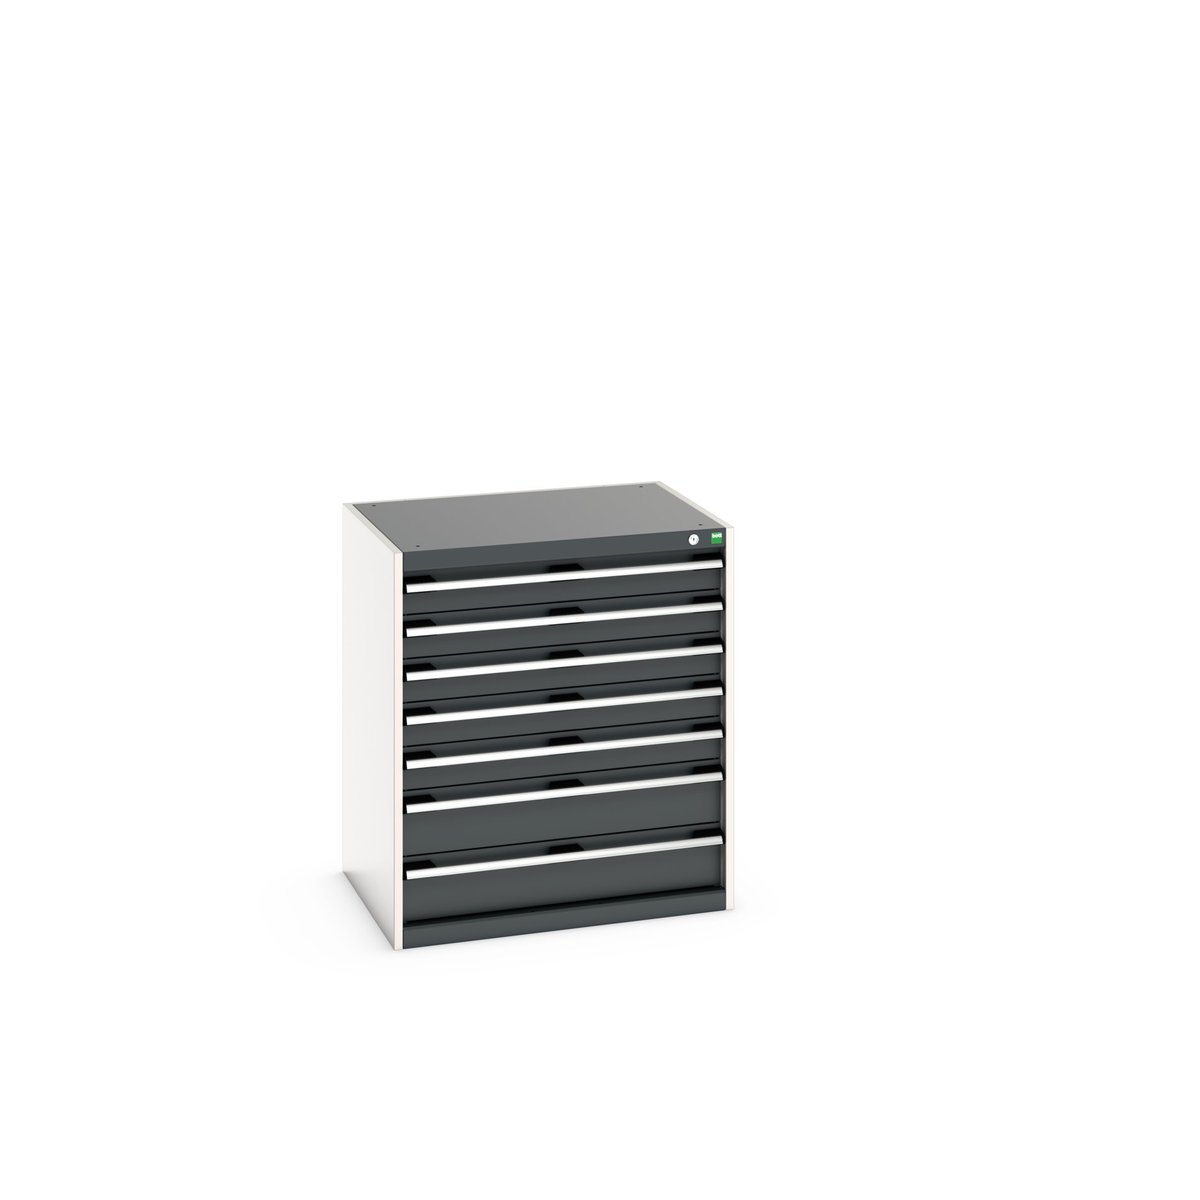 40020041. - cubio drawer cabinet